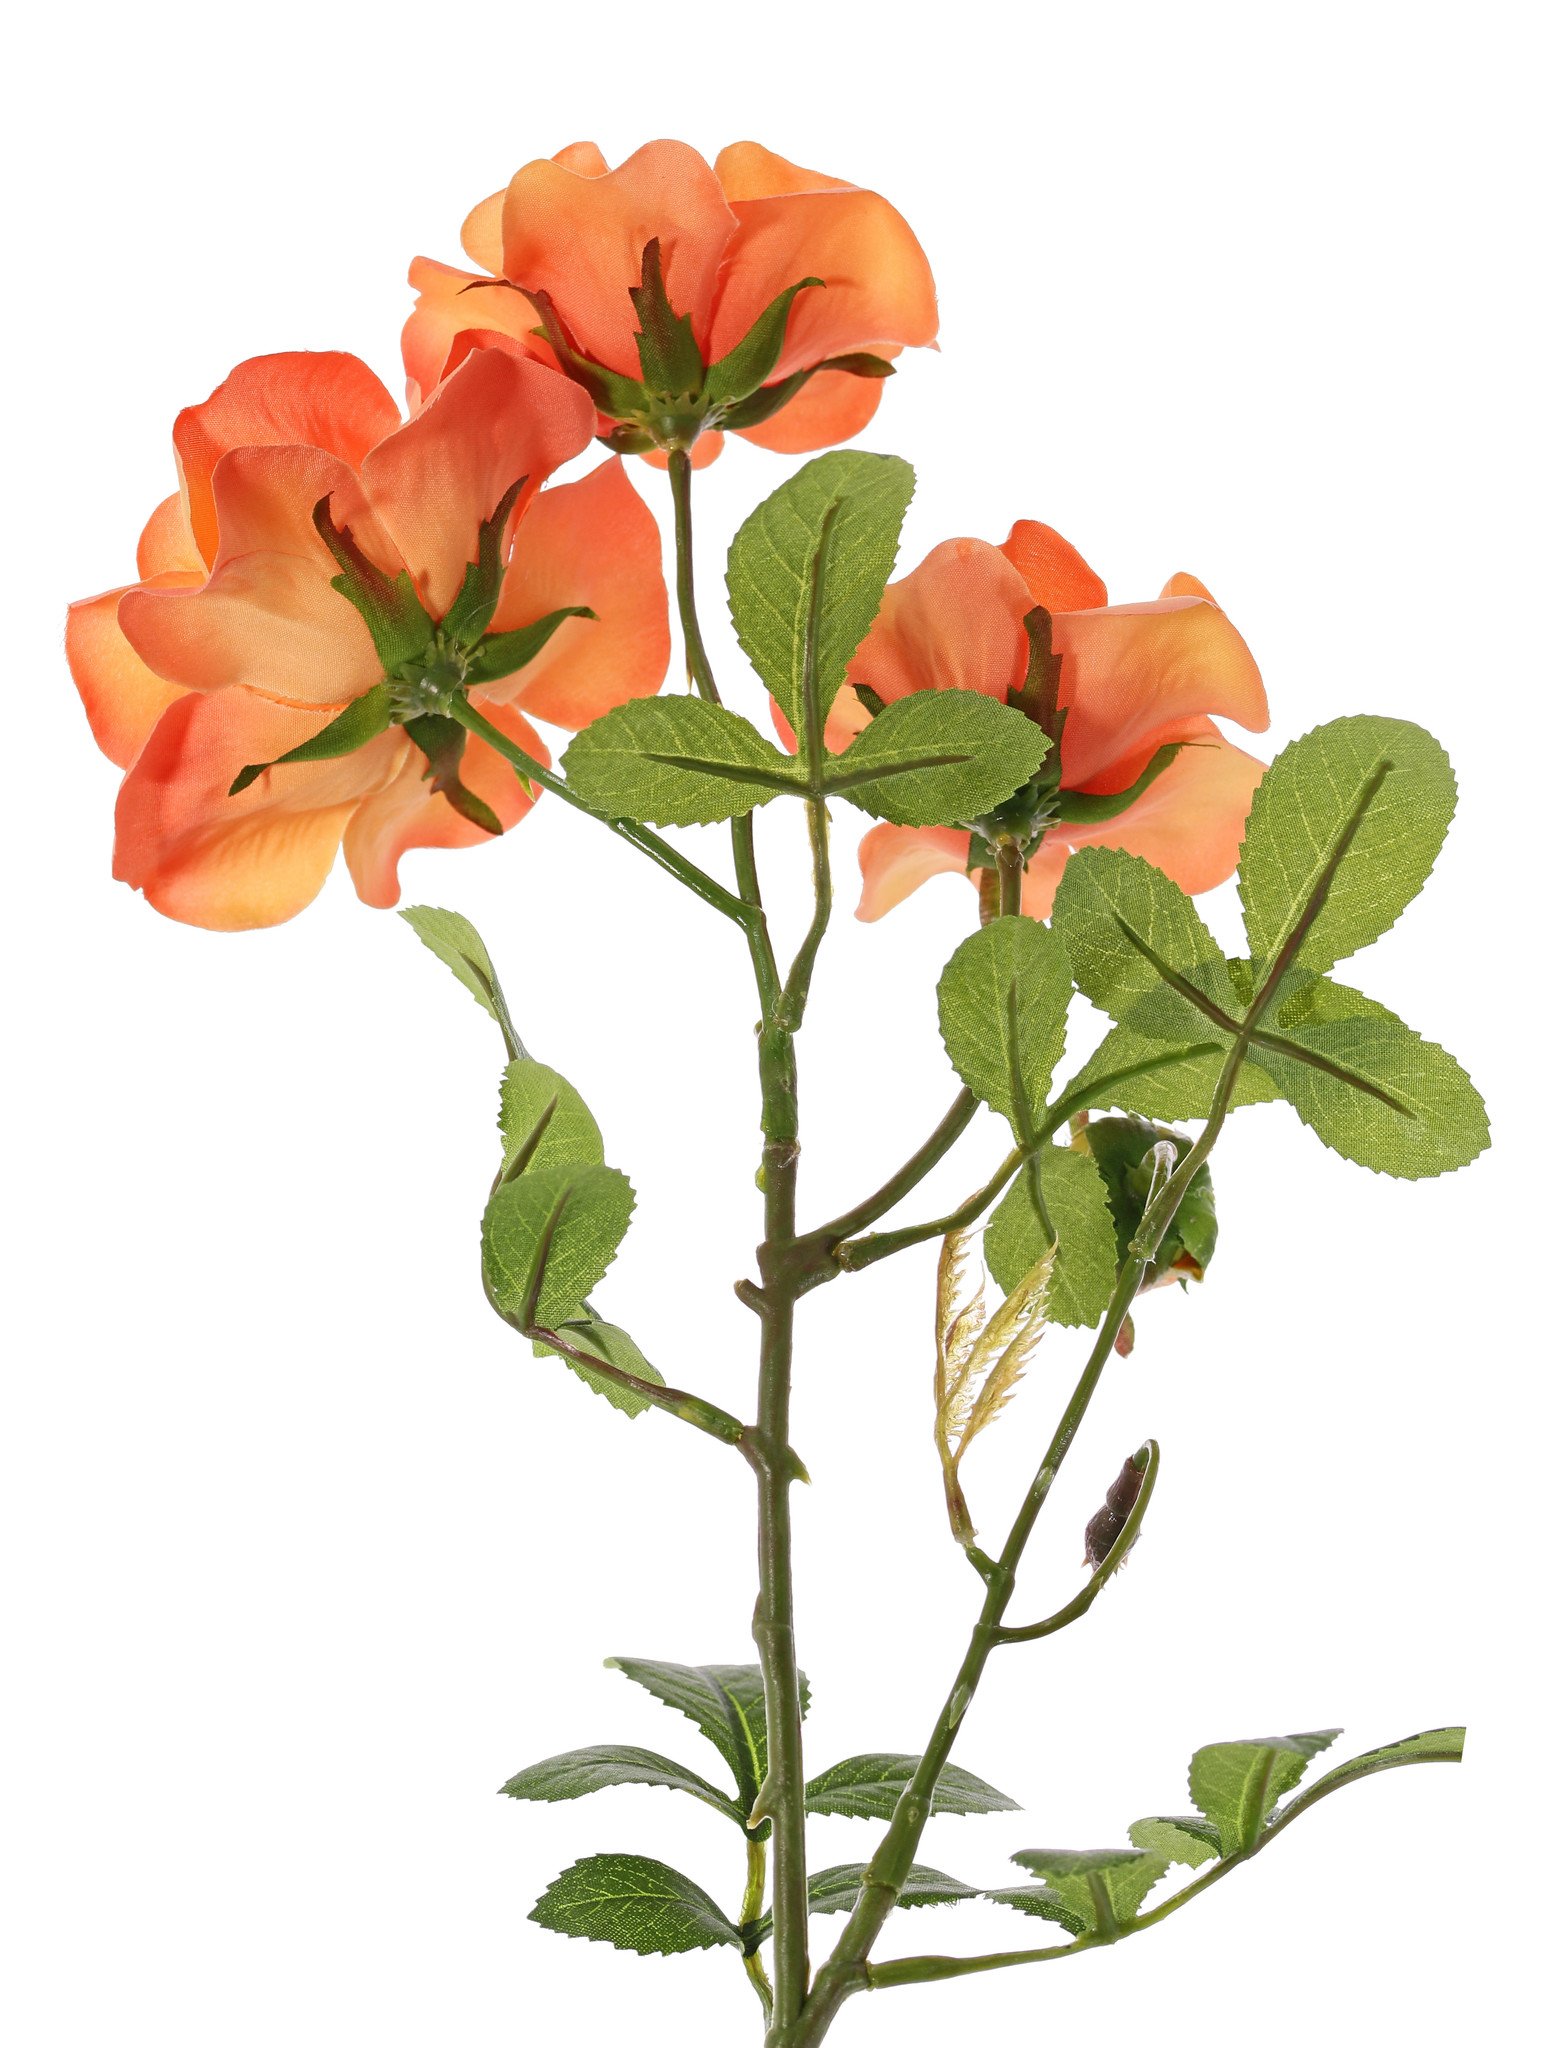 Sweet briarrose (Rosa rubiginosa), 3 flowers (2x Ø 9cm, 1x Ø 7cm) & 1 bud, 24 lvs., (6 sets), 60cm